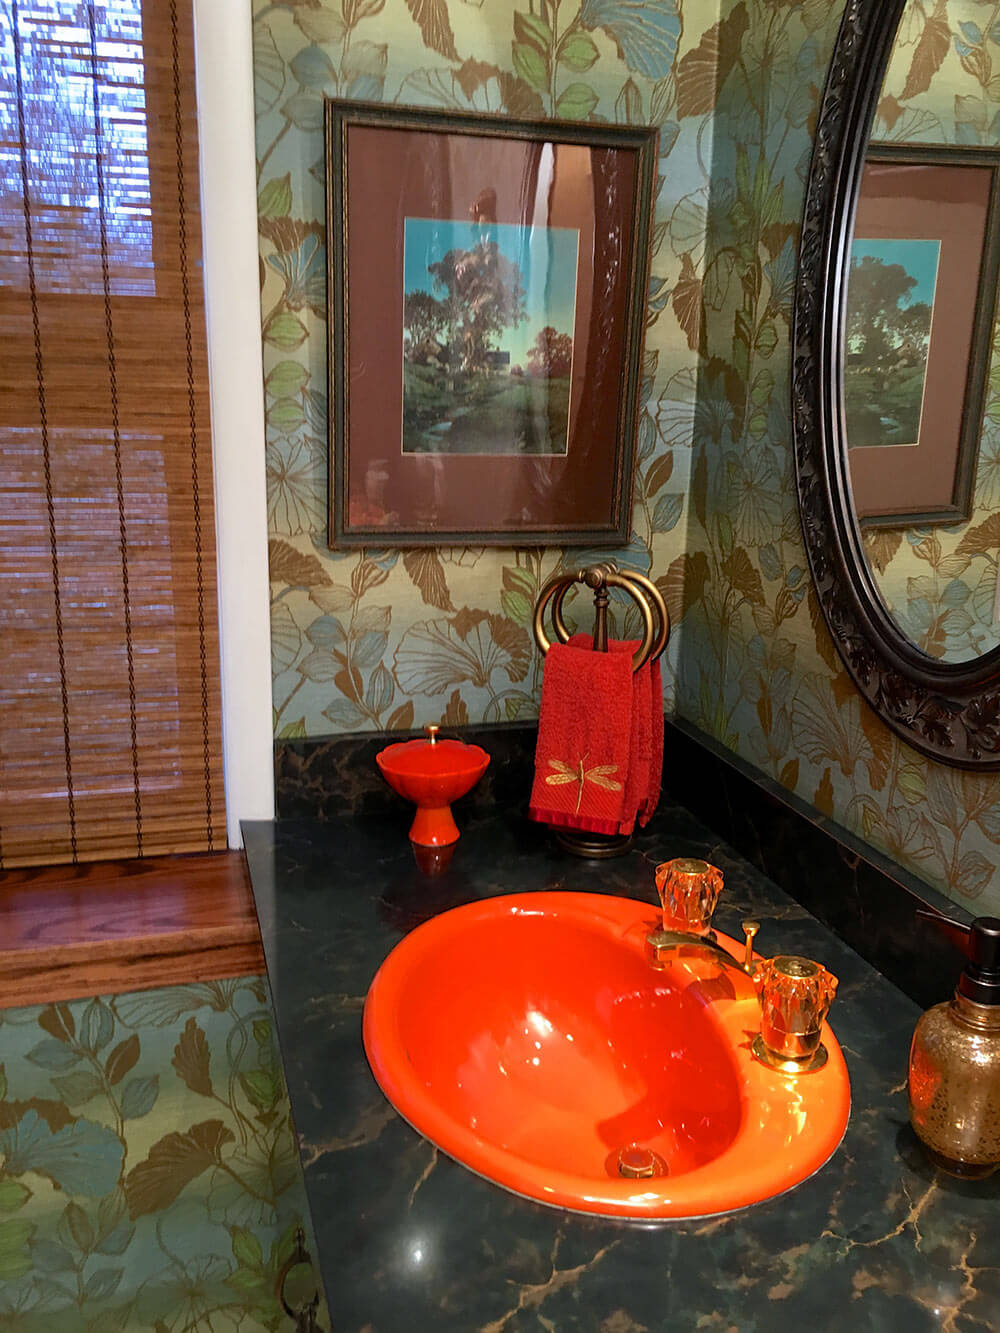 Kathy S New Old Glam Bathroom Revival Featuring An Kohler Fresh Green Receptor Tub And World Of Tile Tile Retro Renovation